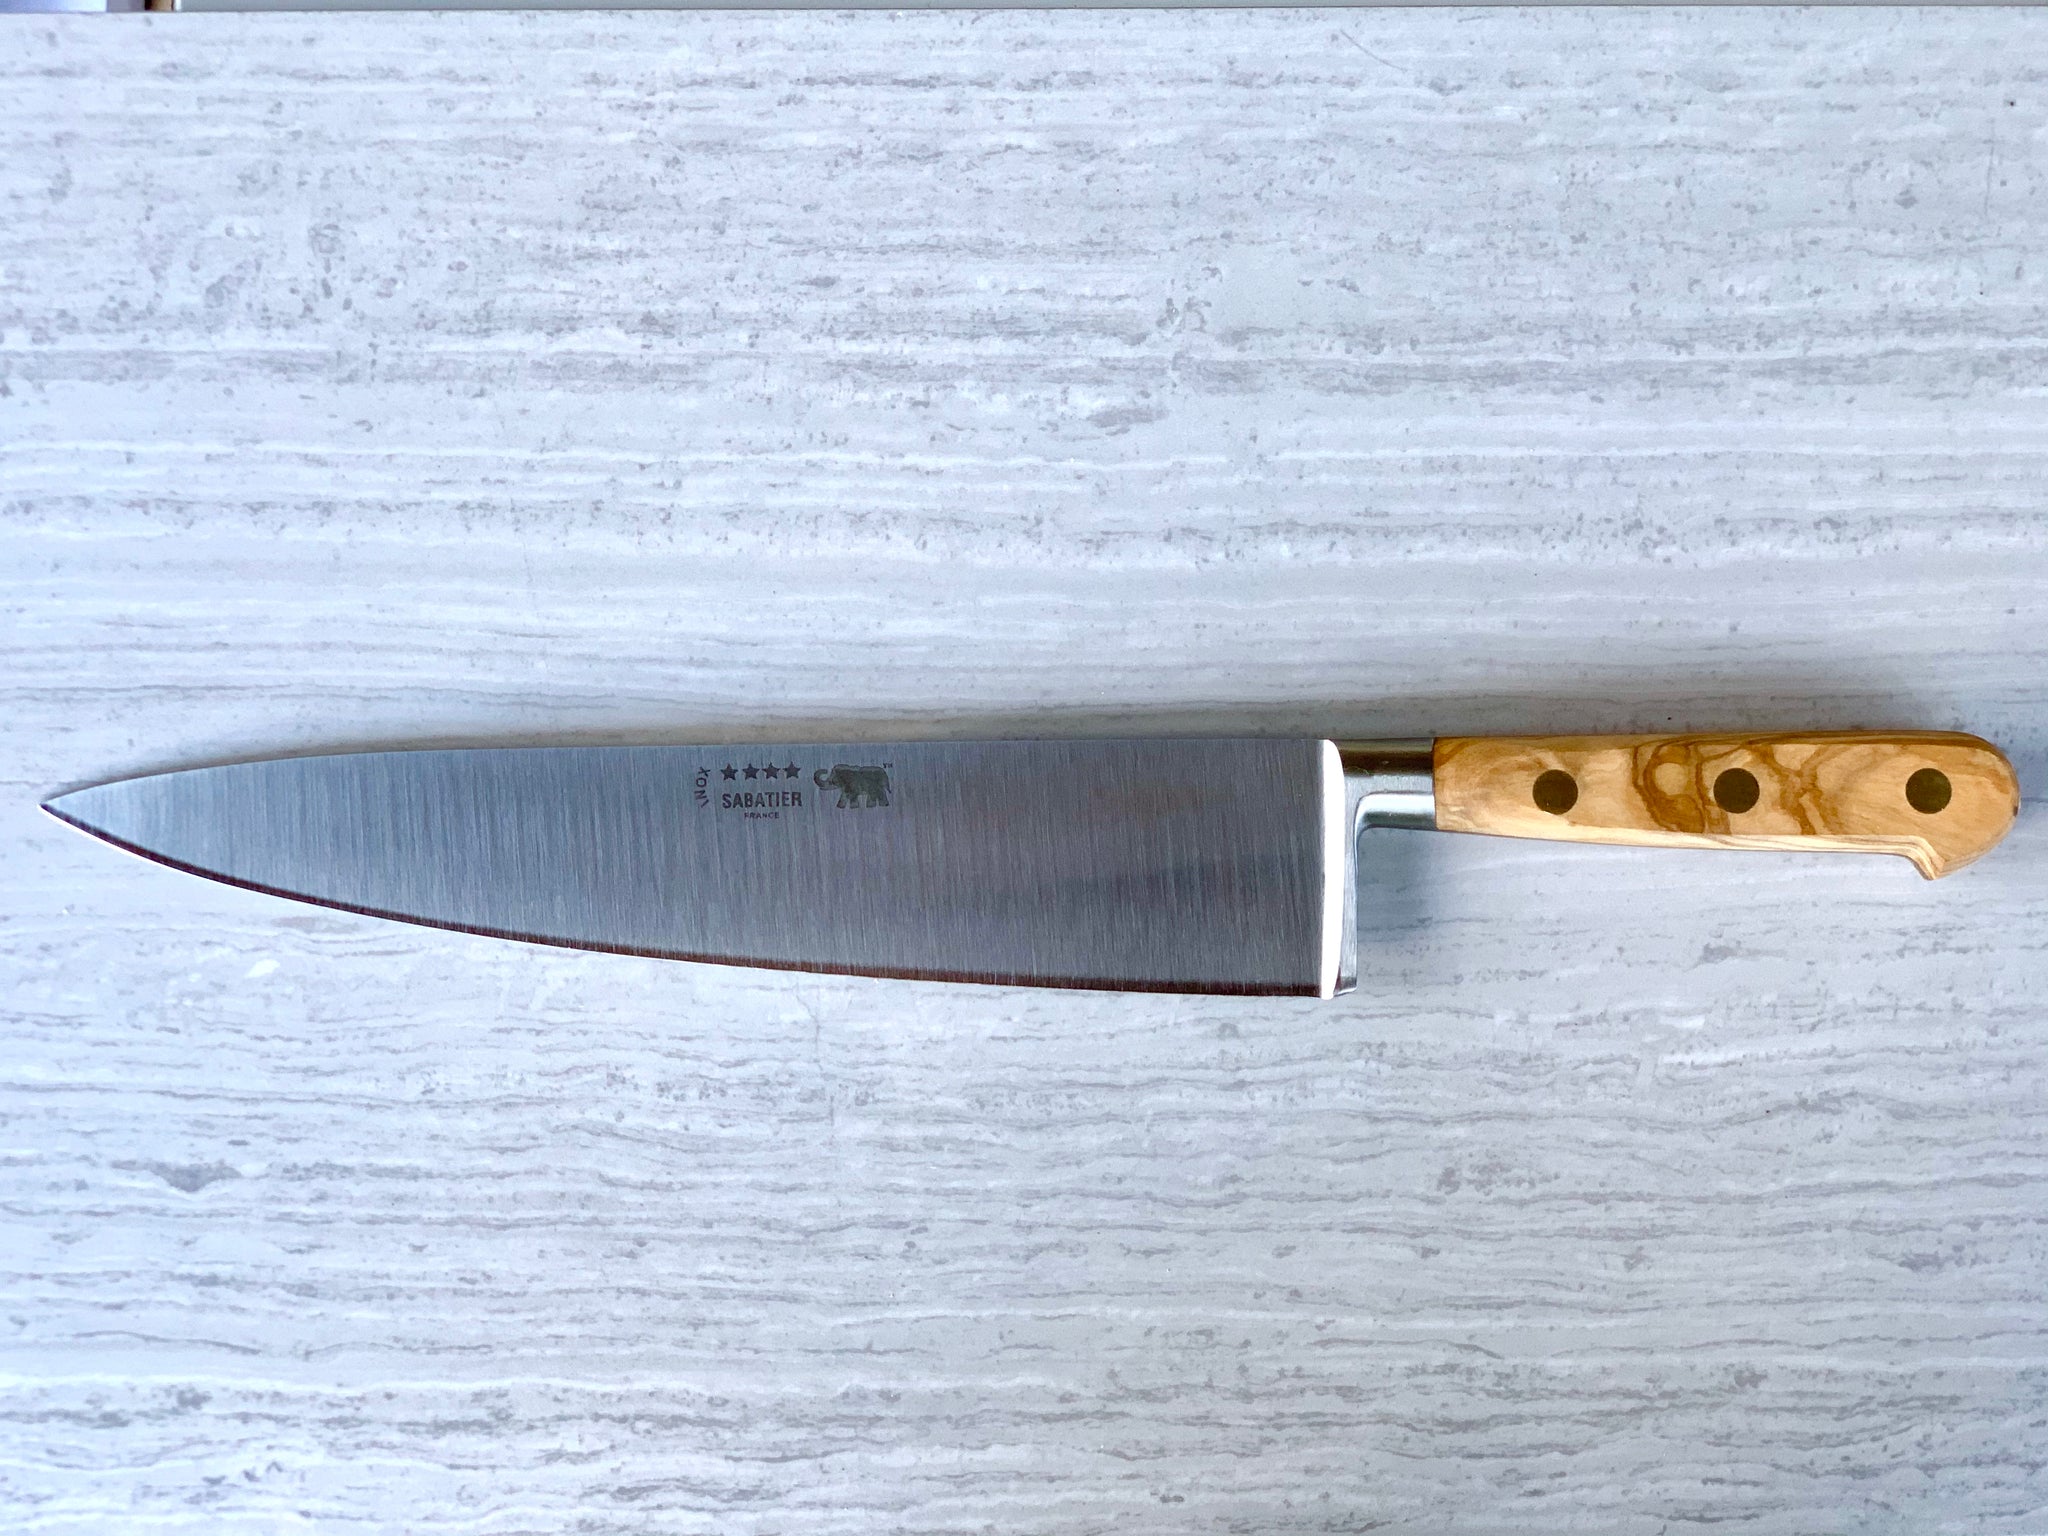 Sabatier Edgekeeper 8-in. Chef Knife with Sheath